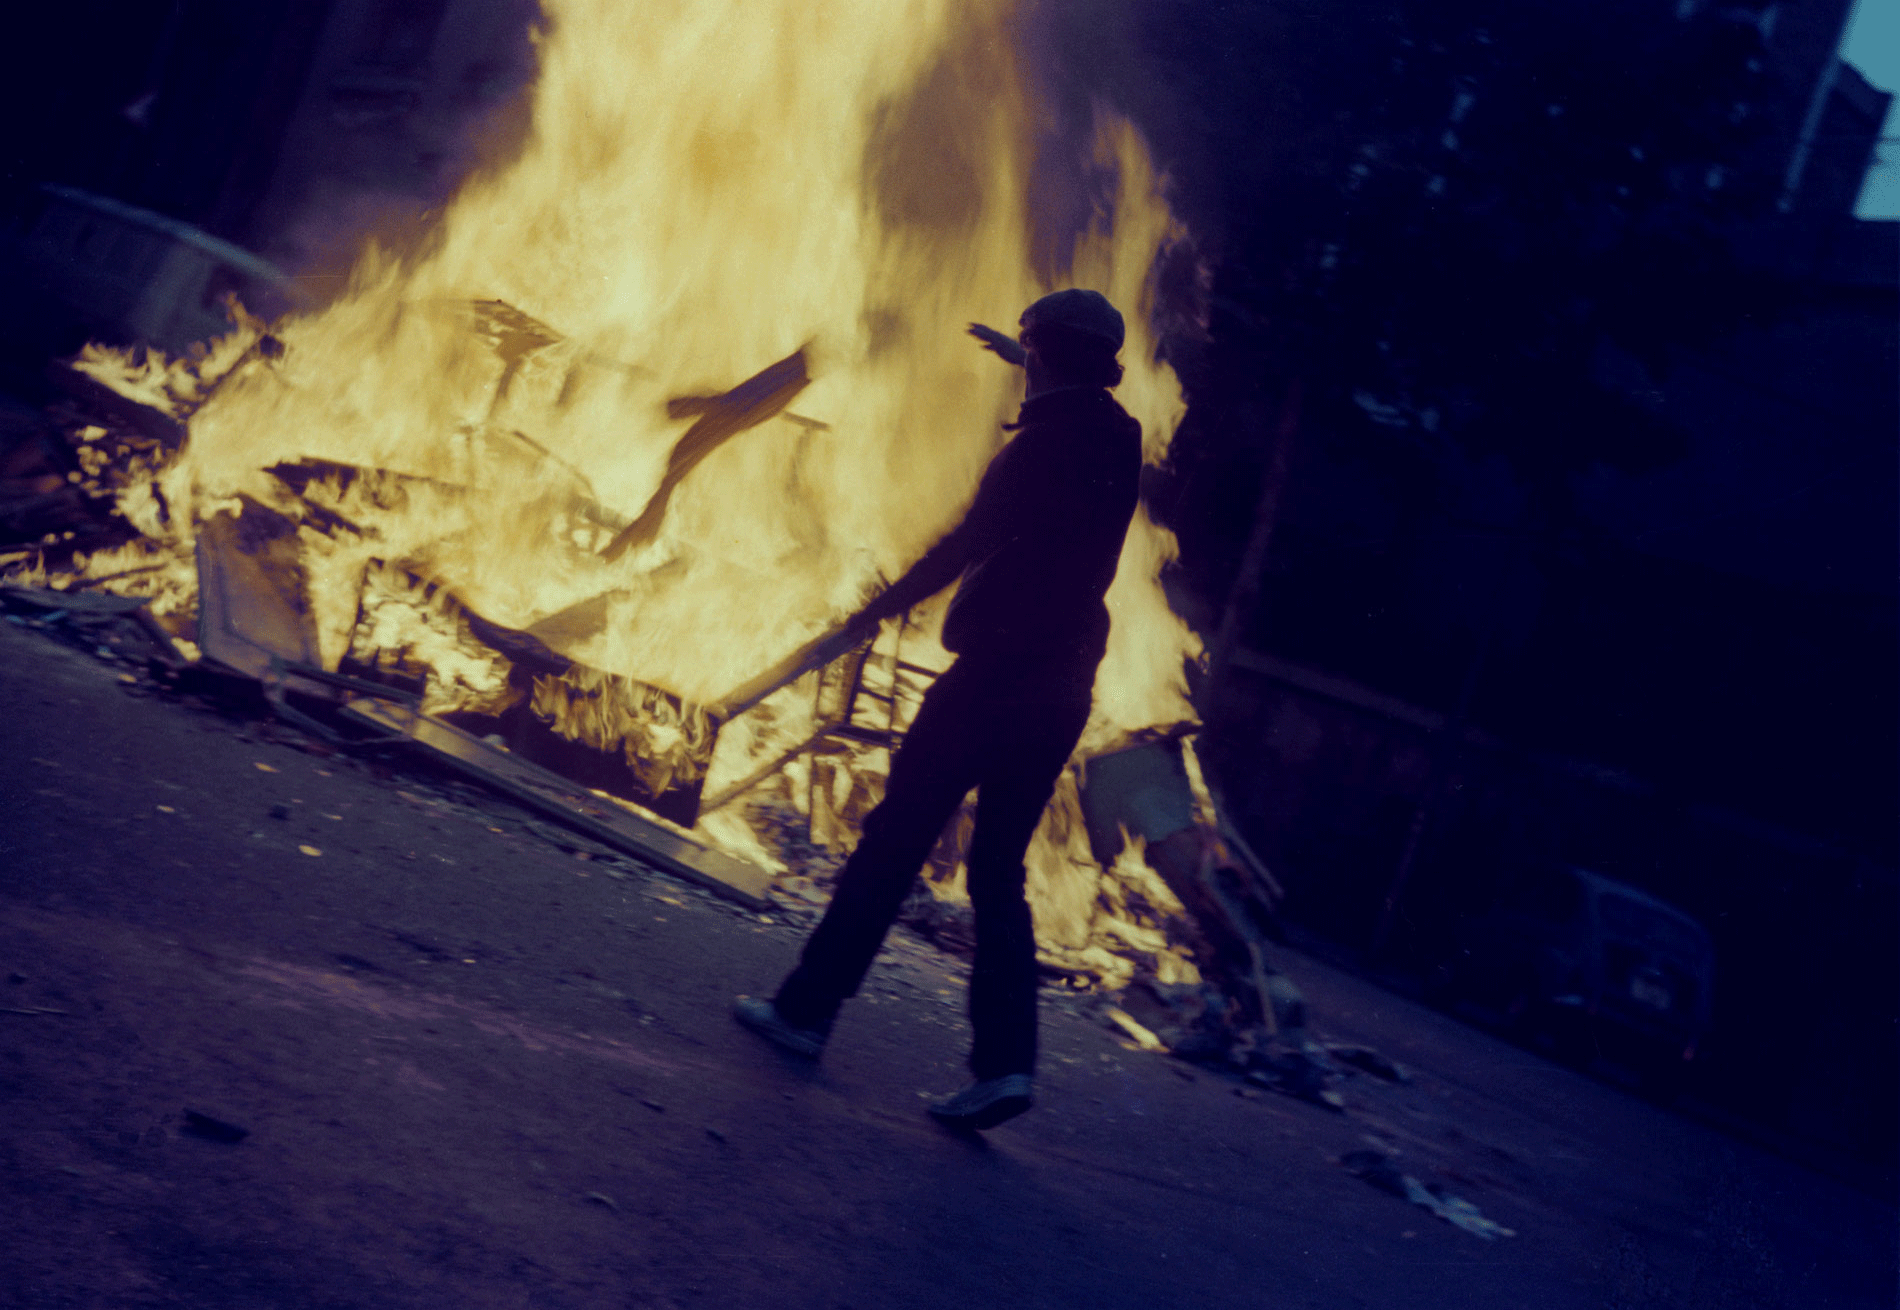 Autorretrato quemando cosas, 1981. De Nexo. Serie Exilios. 48,92 x 70 cm.